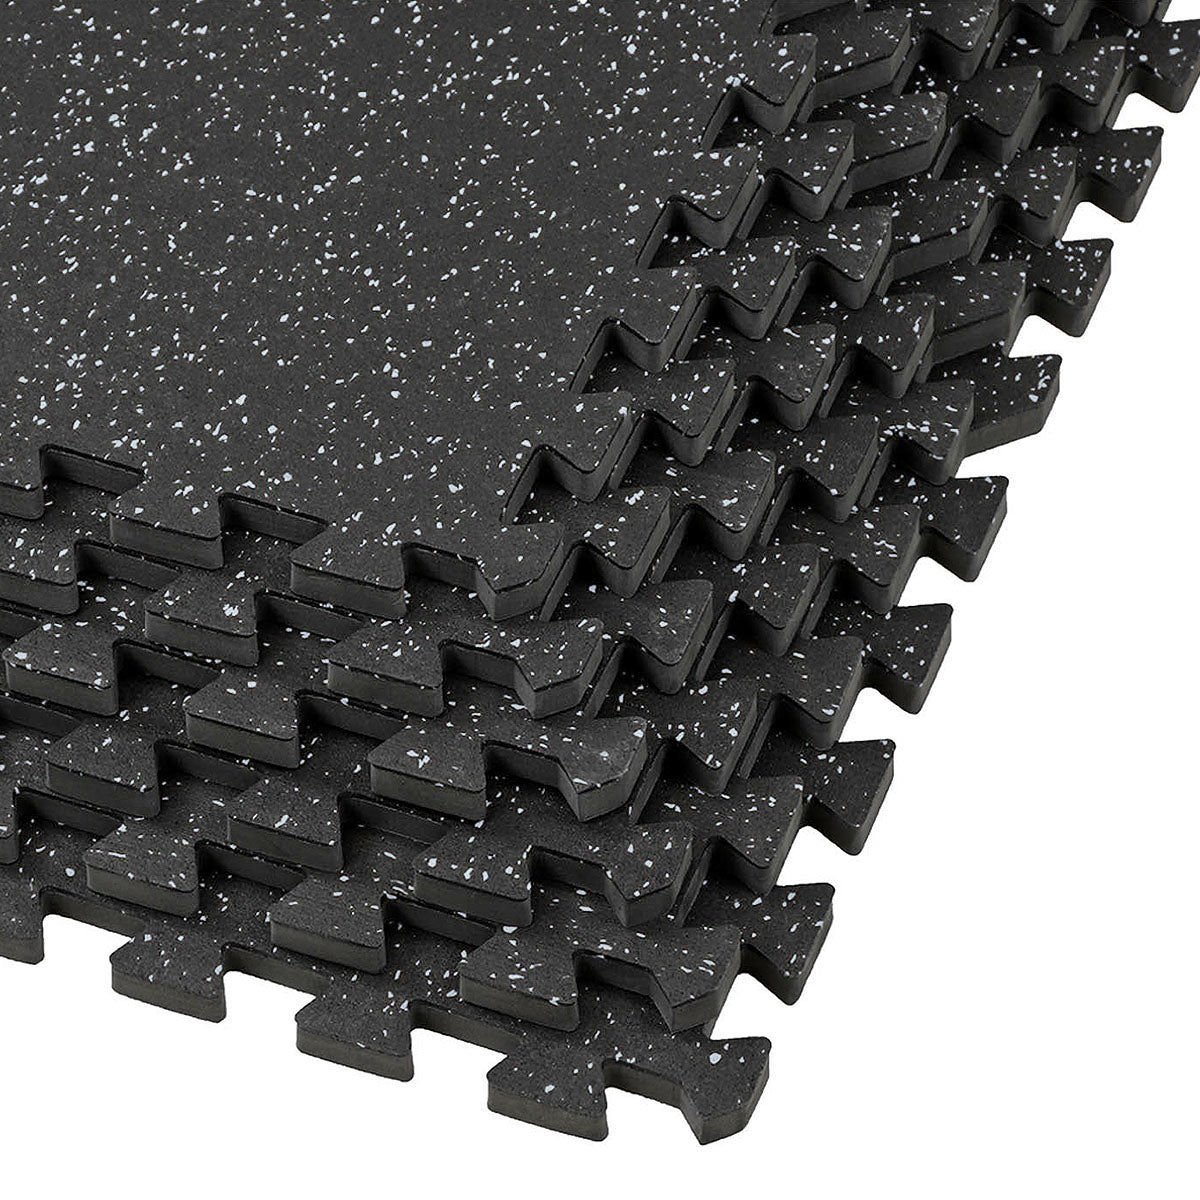 Grey 24 in. x 24 in. x 0.5 in. Interlocking EVA Foam Floor Mat (6-Pack)